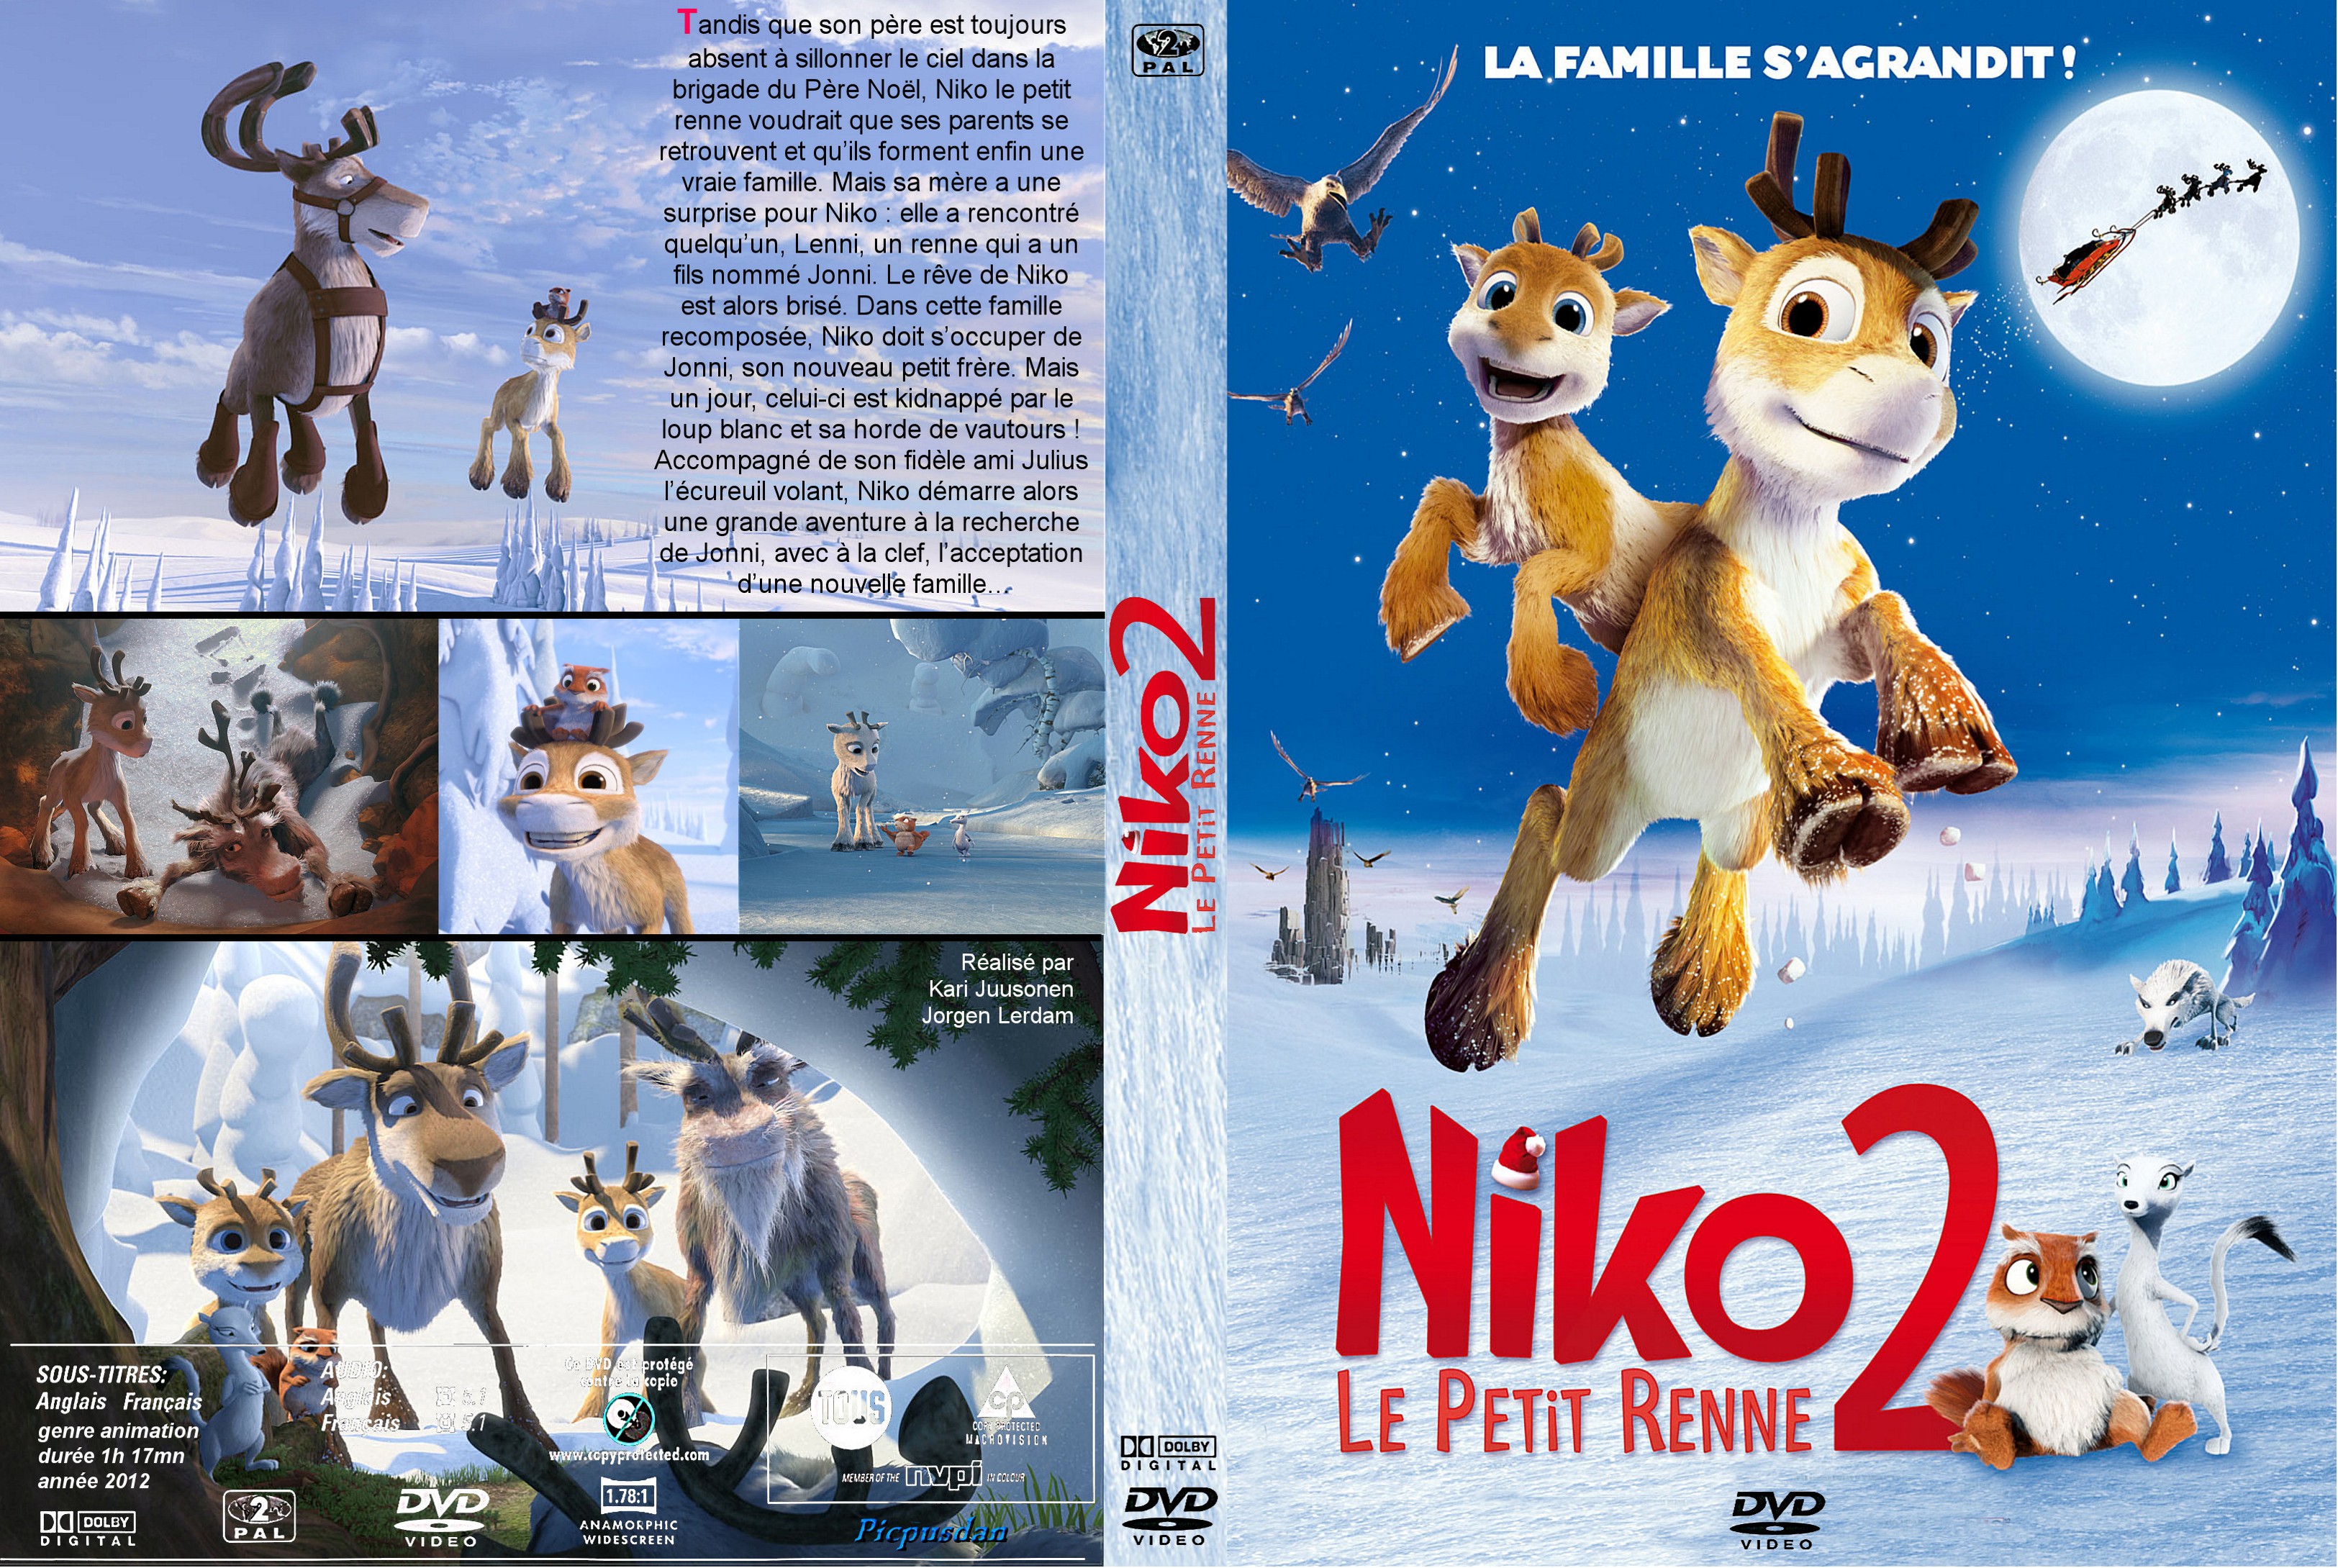 Jaquette DVD Niko le petit renne 2 custom